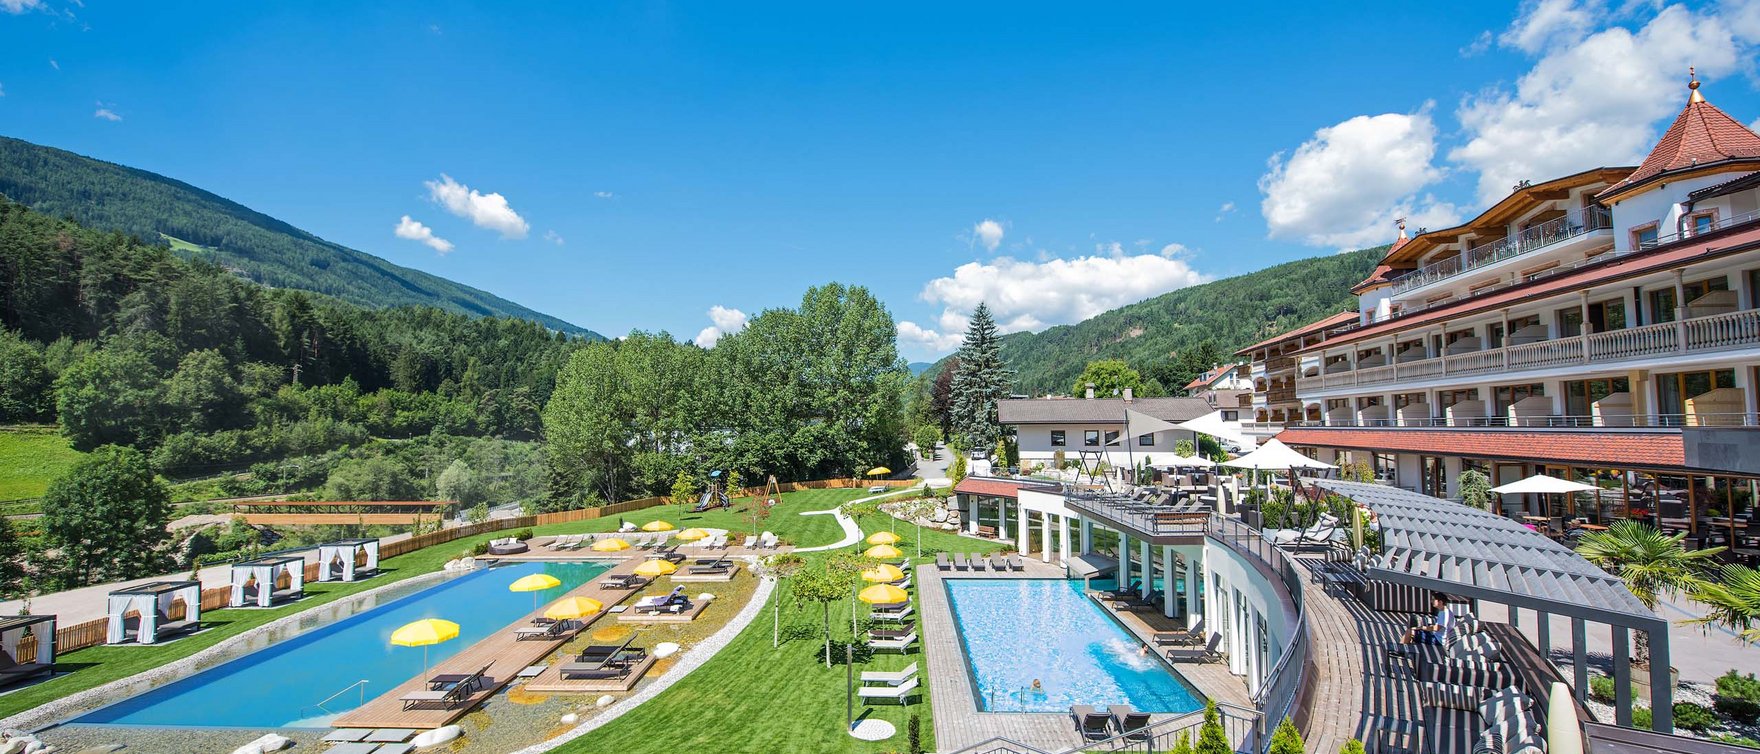 Hotels in Kiens in Val Pusteria/Pustertal: information